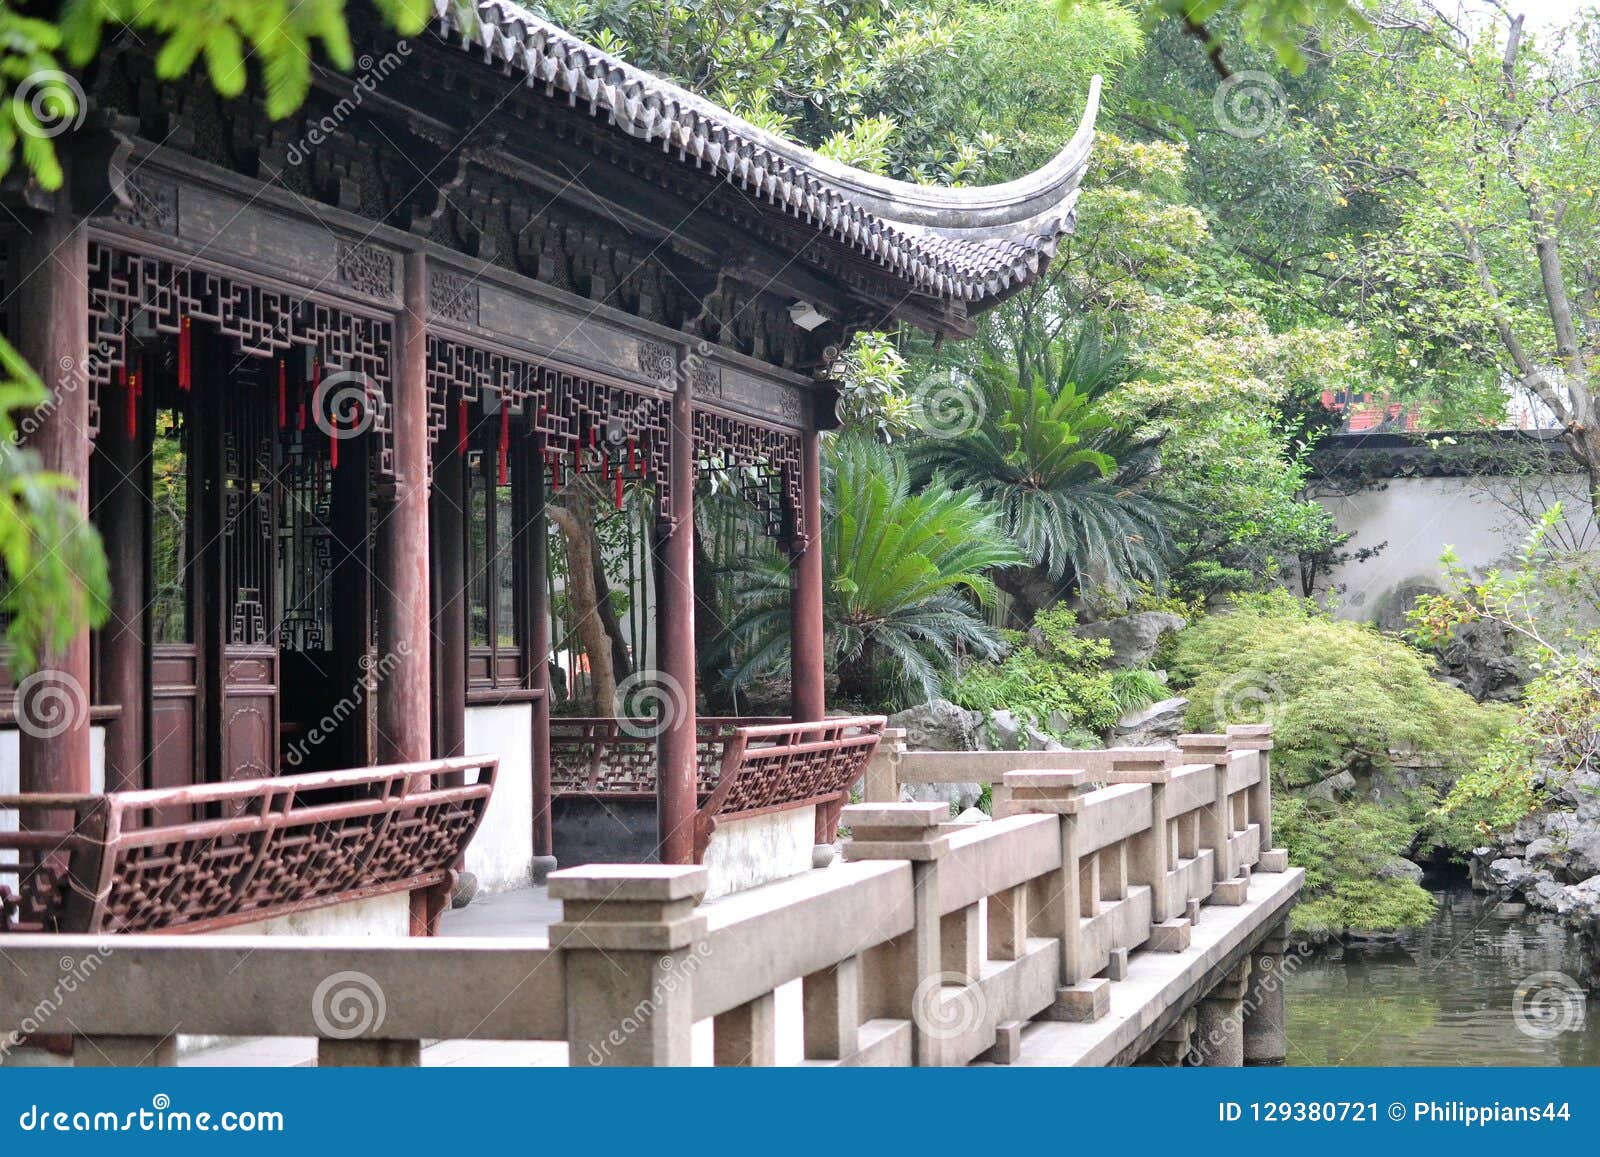 Shanghai Yuyuan Garden Historical Tradicional Chinese Garden In